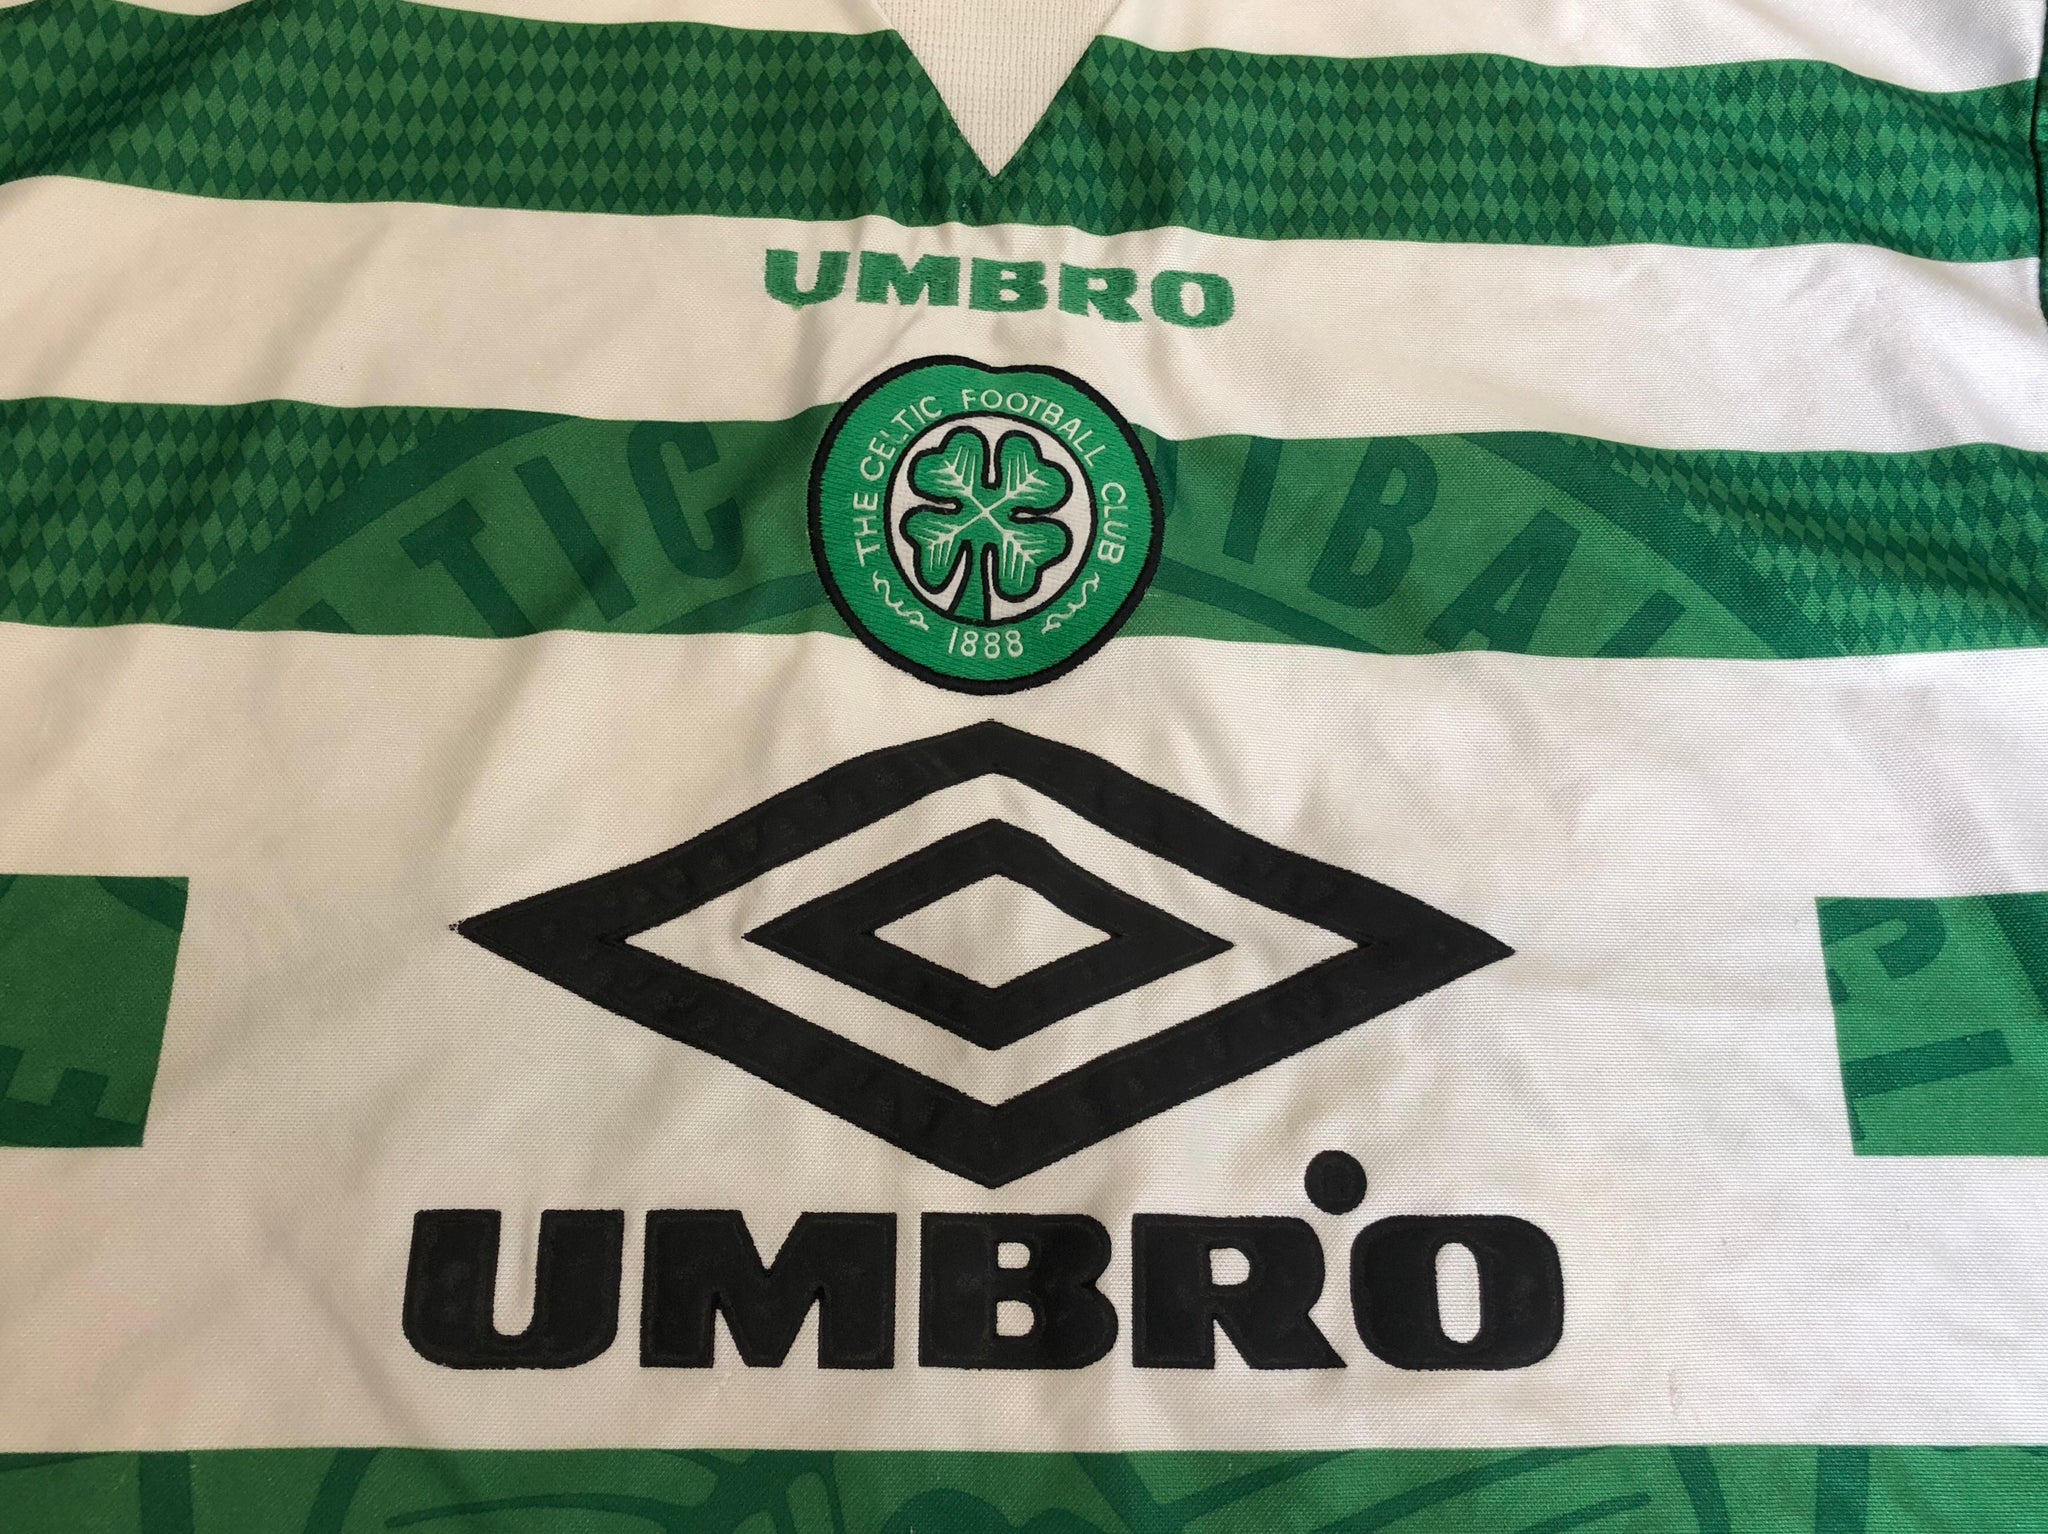 Vintage Celtic Umbro Football Shirt